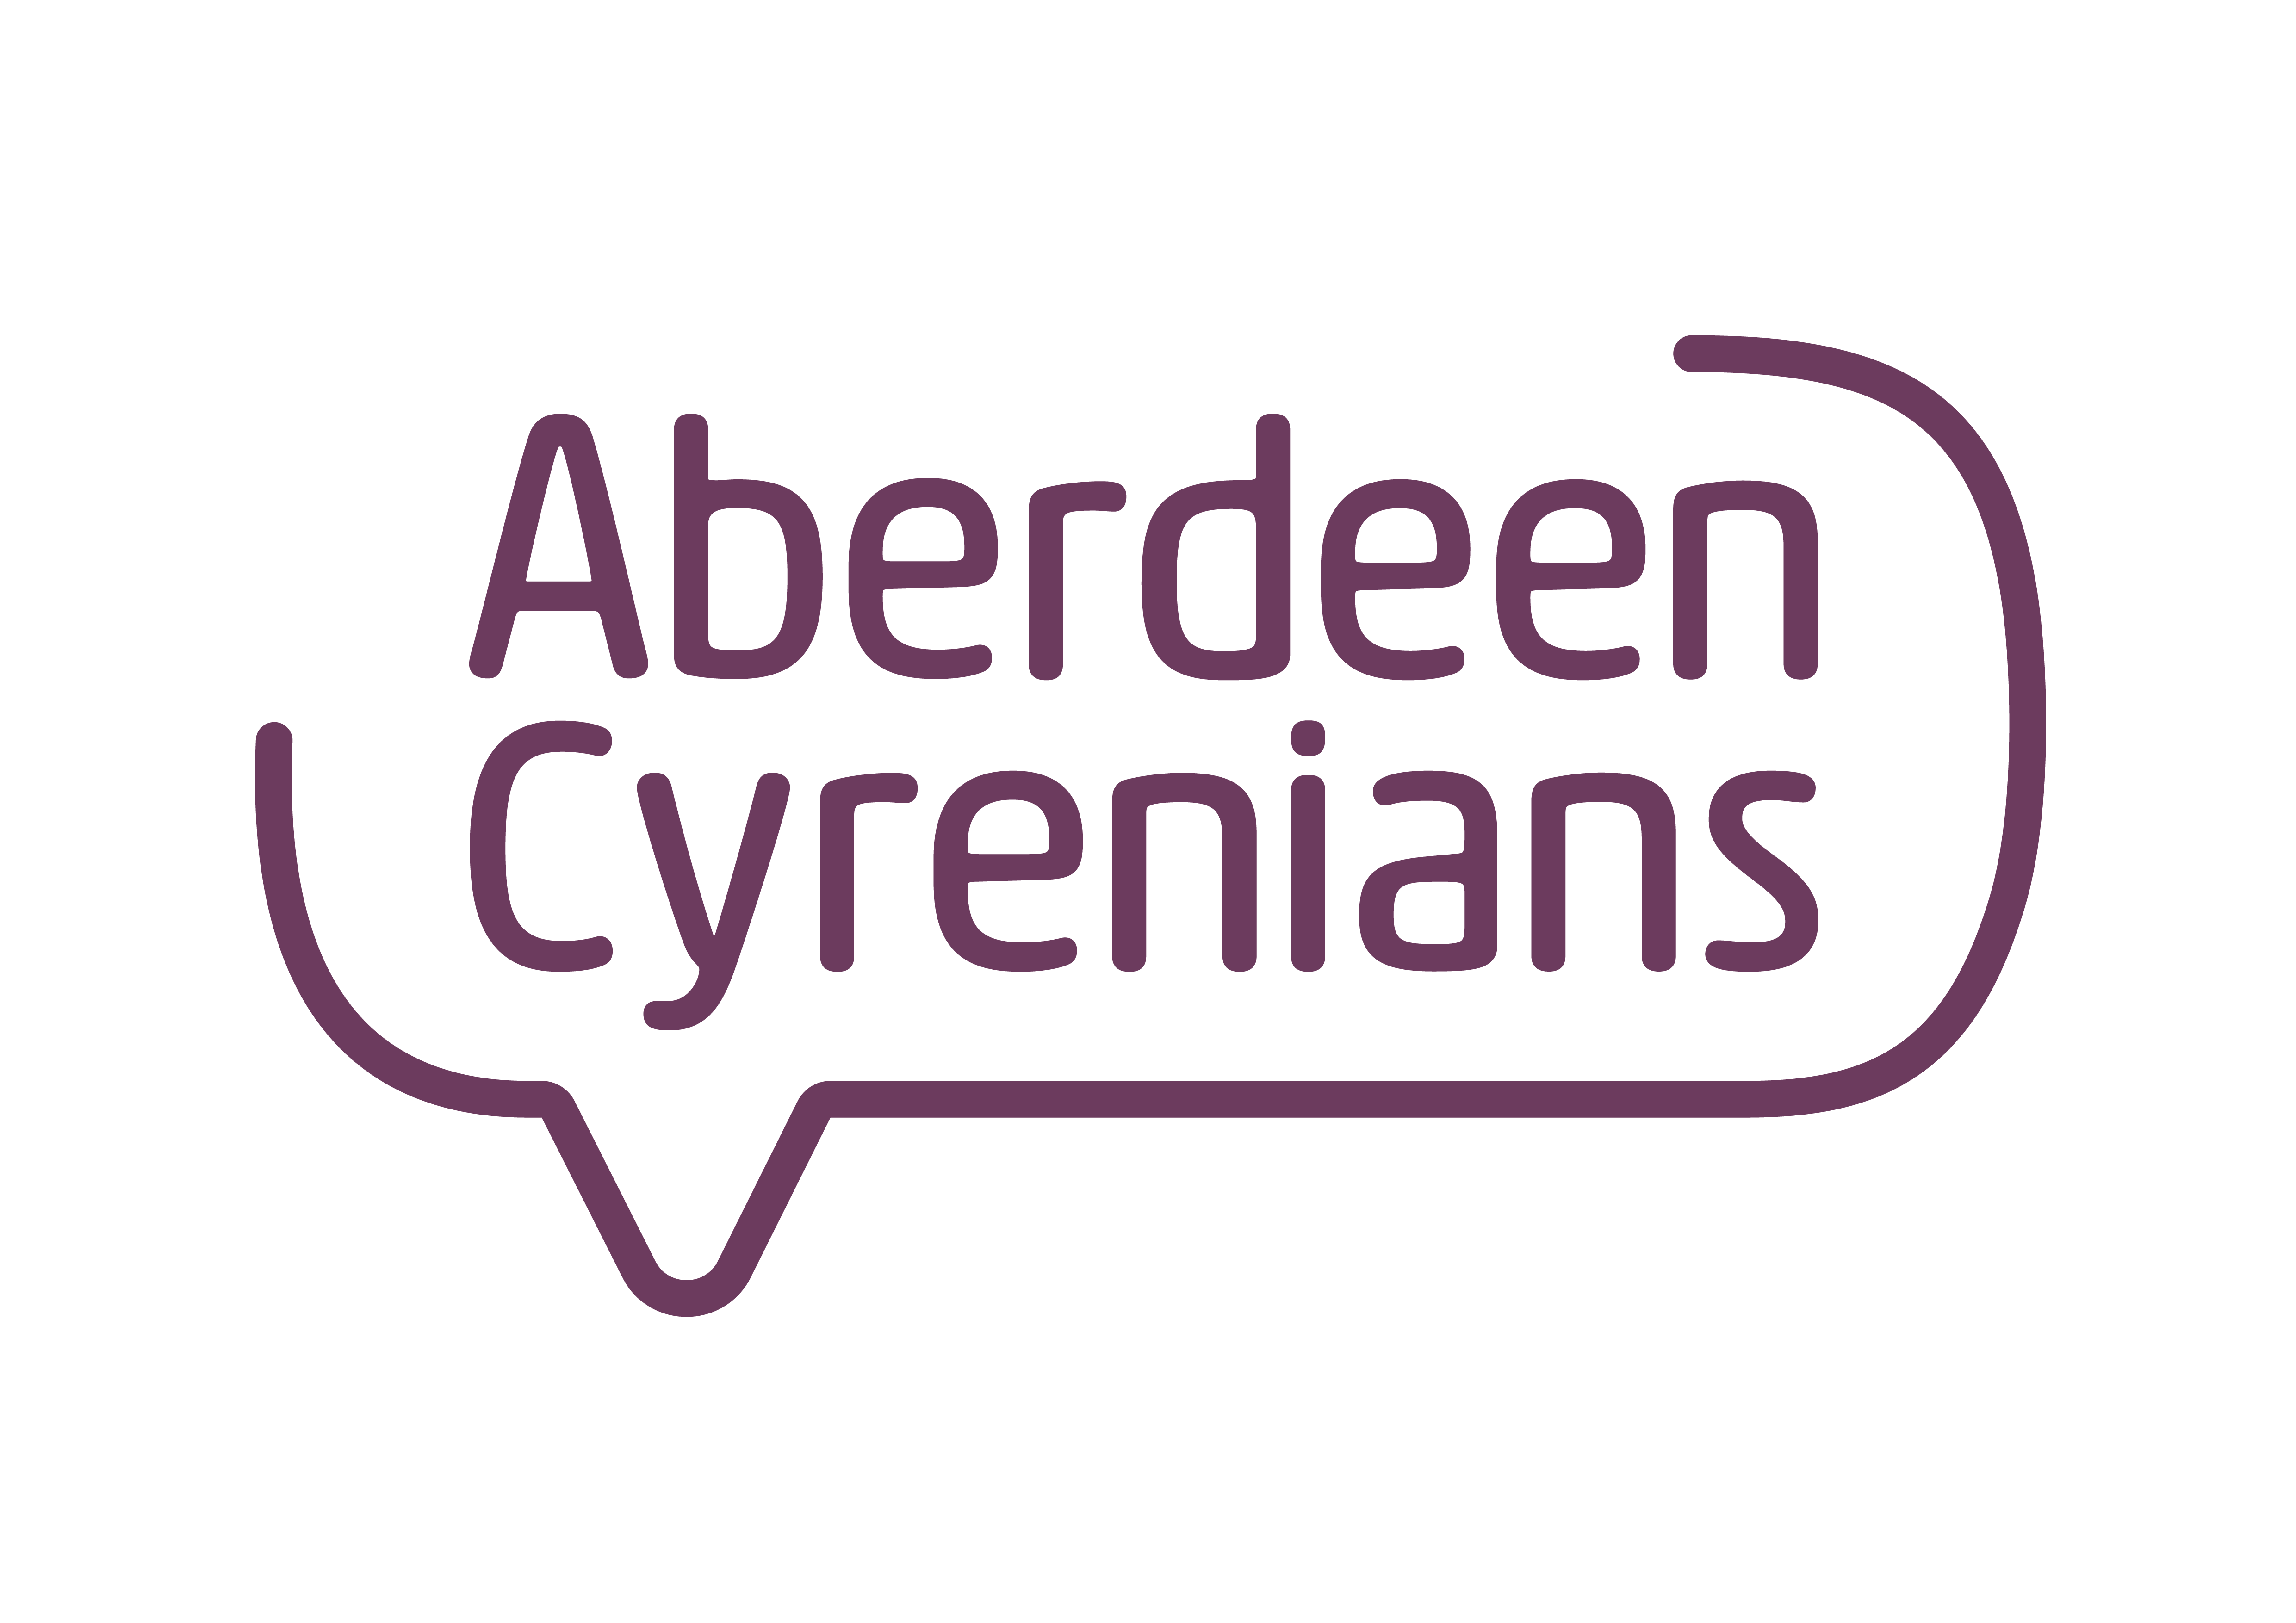 Homelessness charity Aberdeen Cyrenians unveils new look